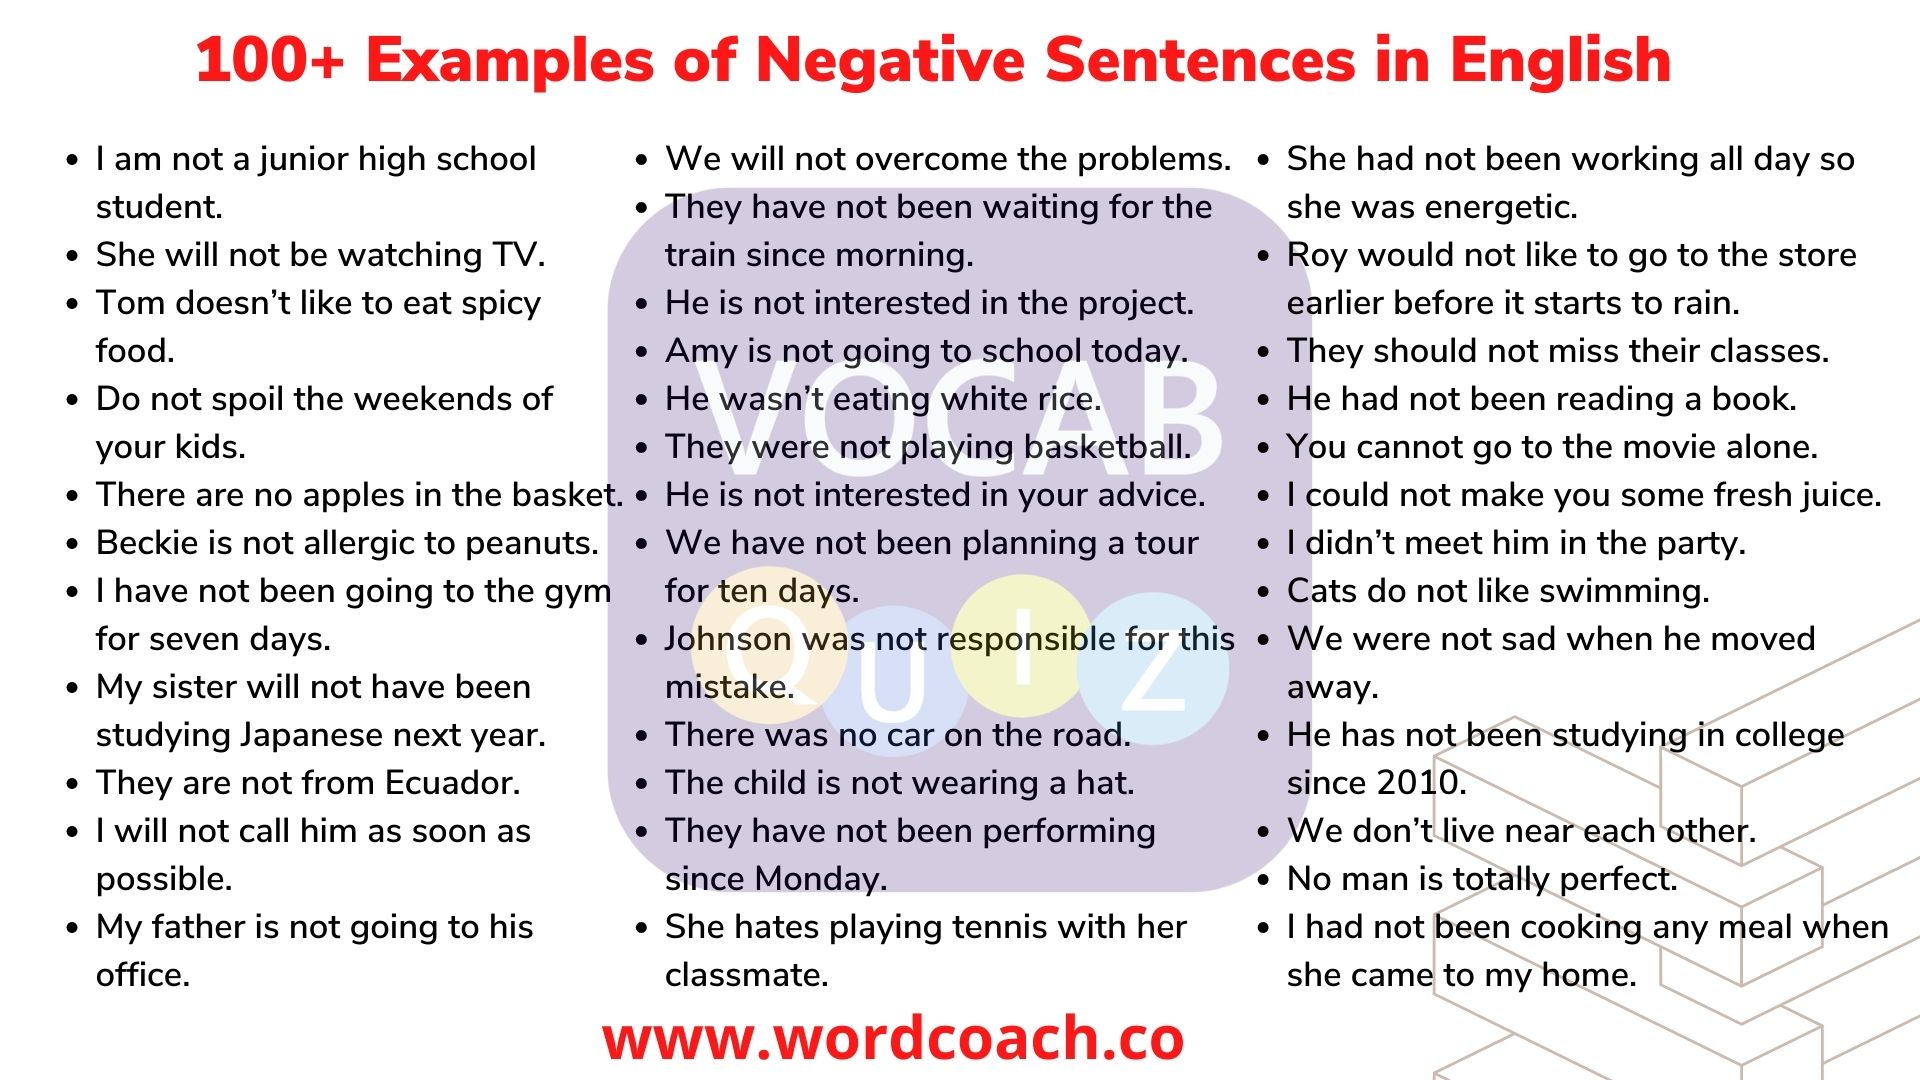 negative-sentences-vocab-quiz